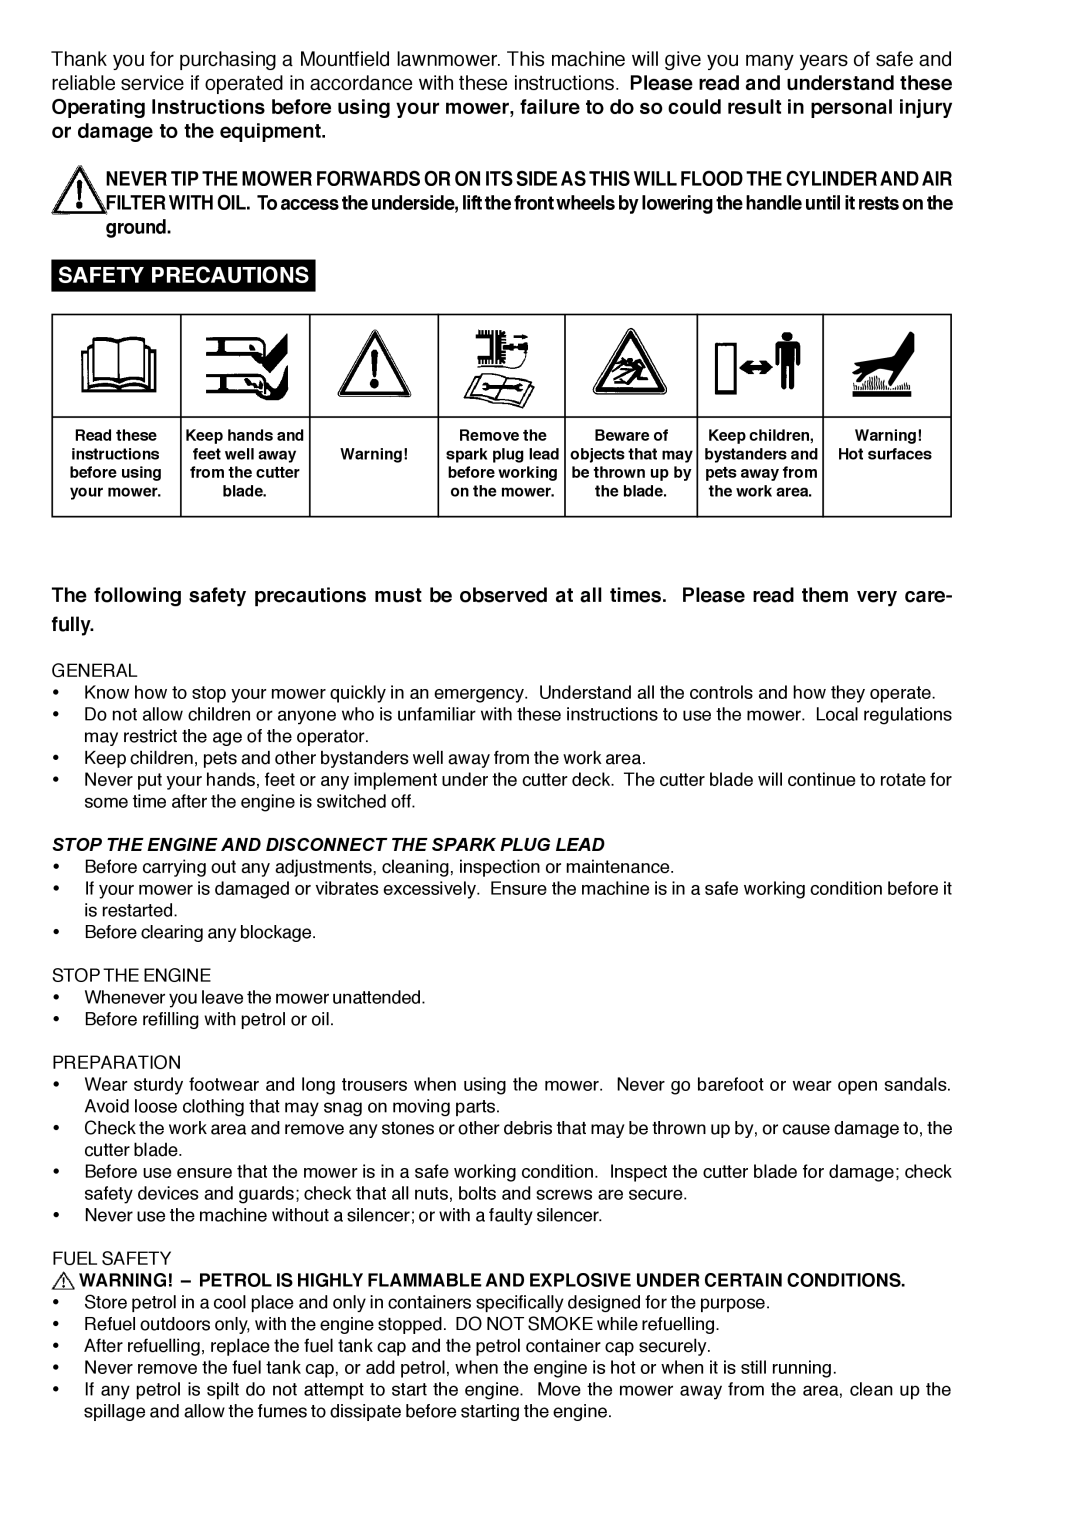 Mountfield 291502148/BQ operating instructions Safety Precautions 